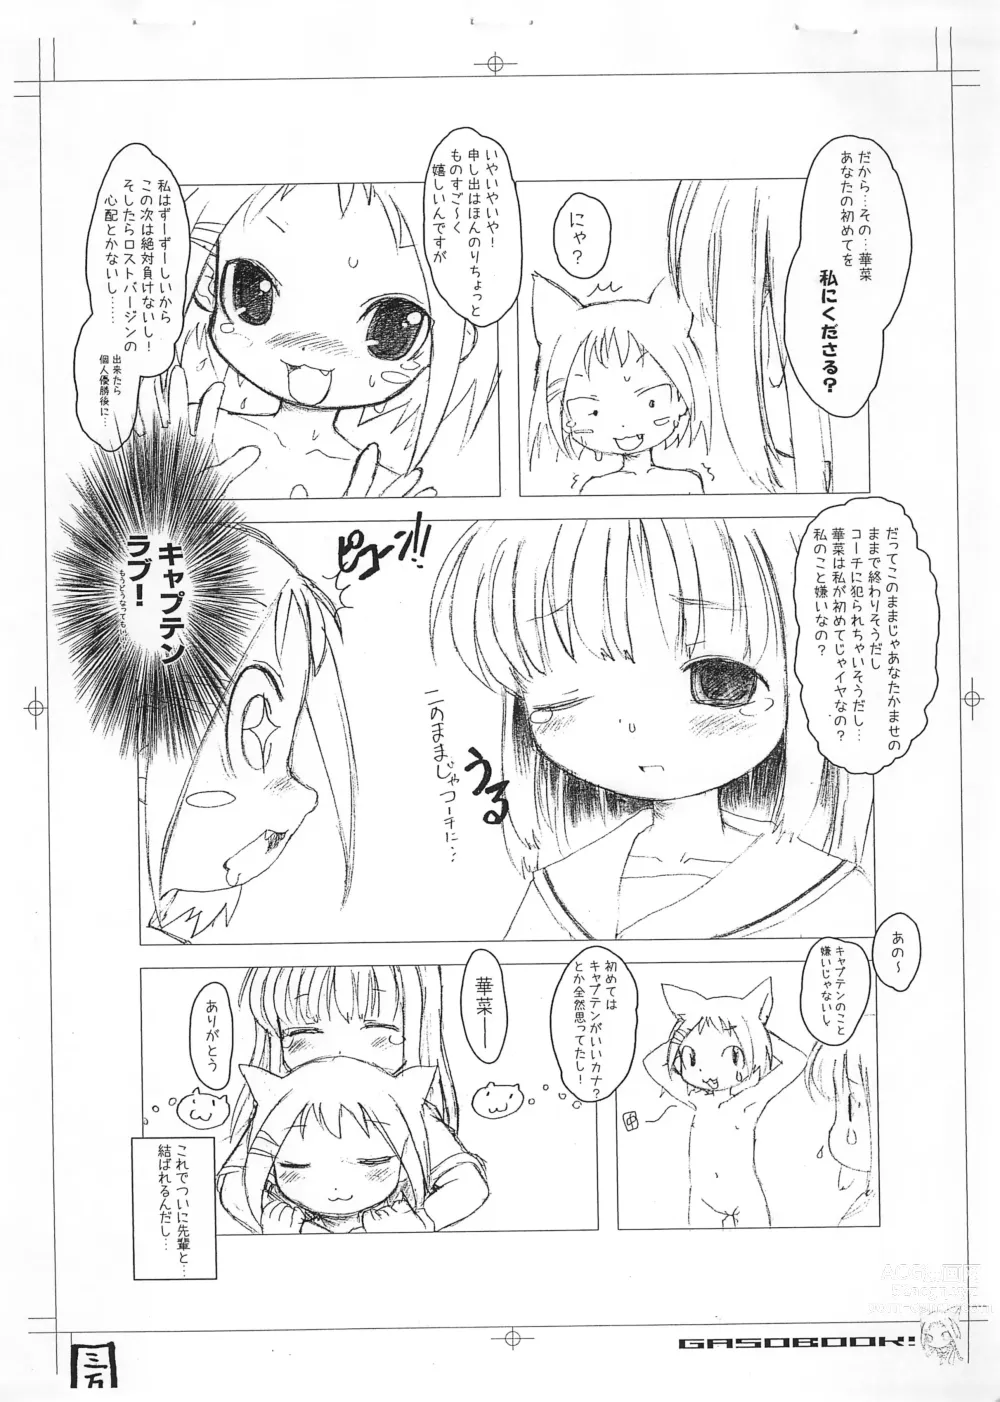 Page 4 of doujinshi Daa